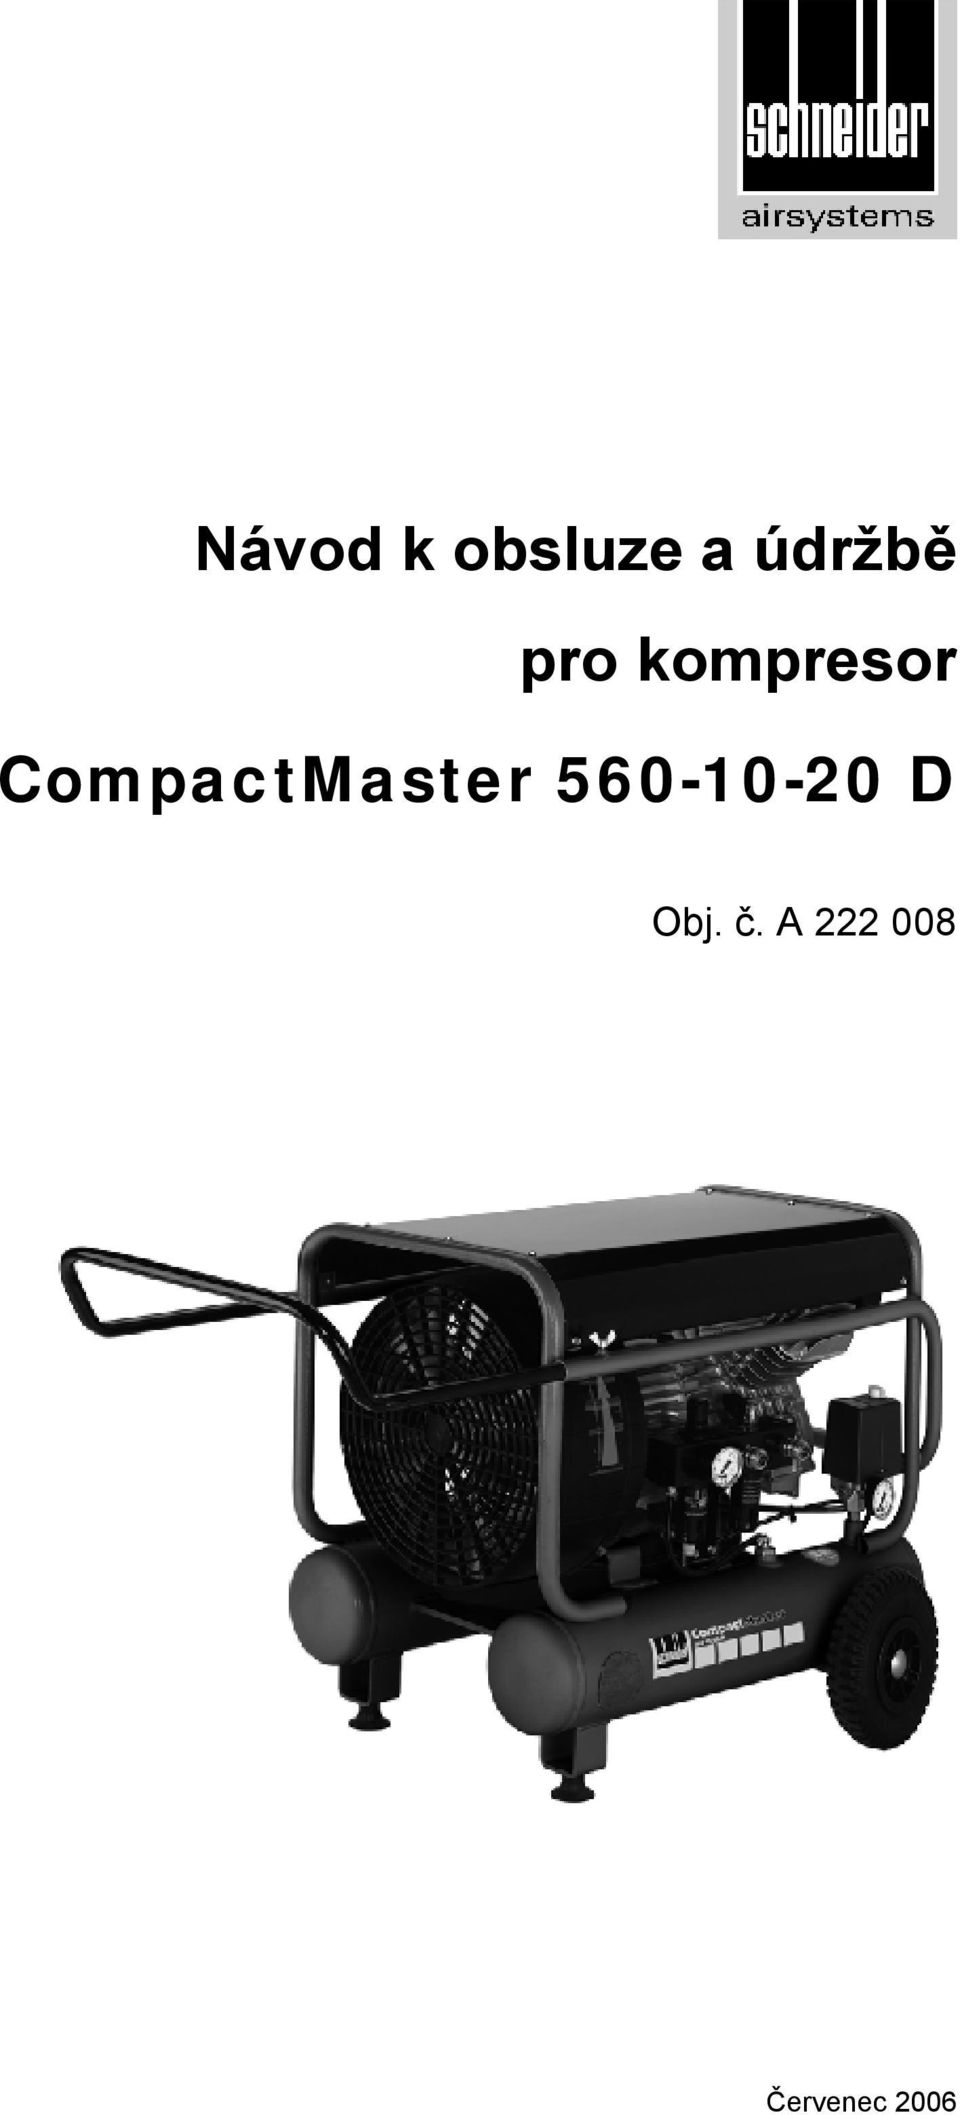 CompactMaster 560-10-20